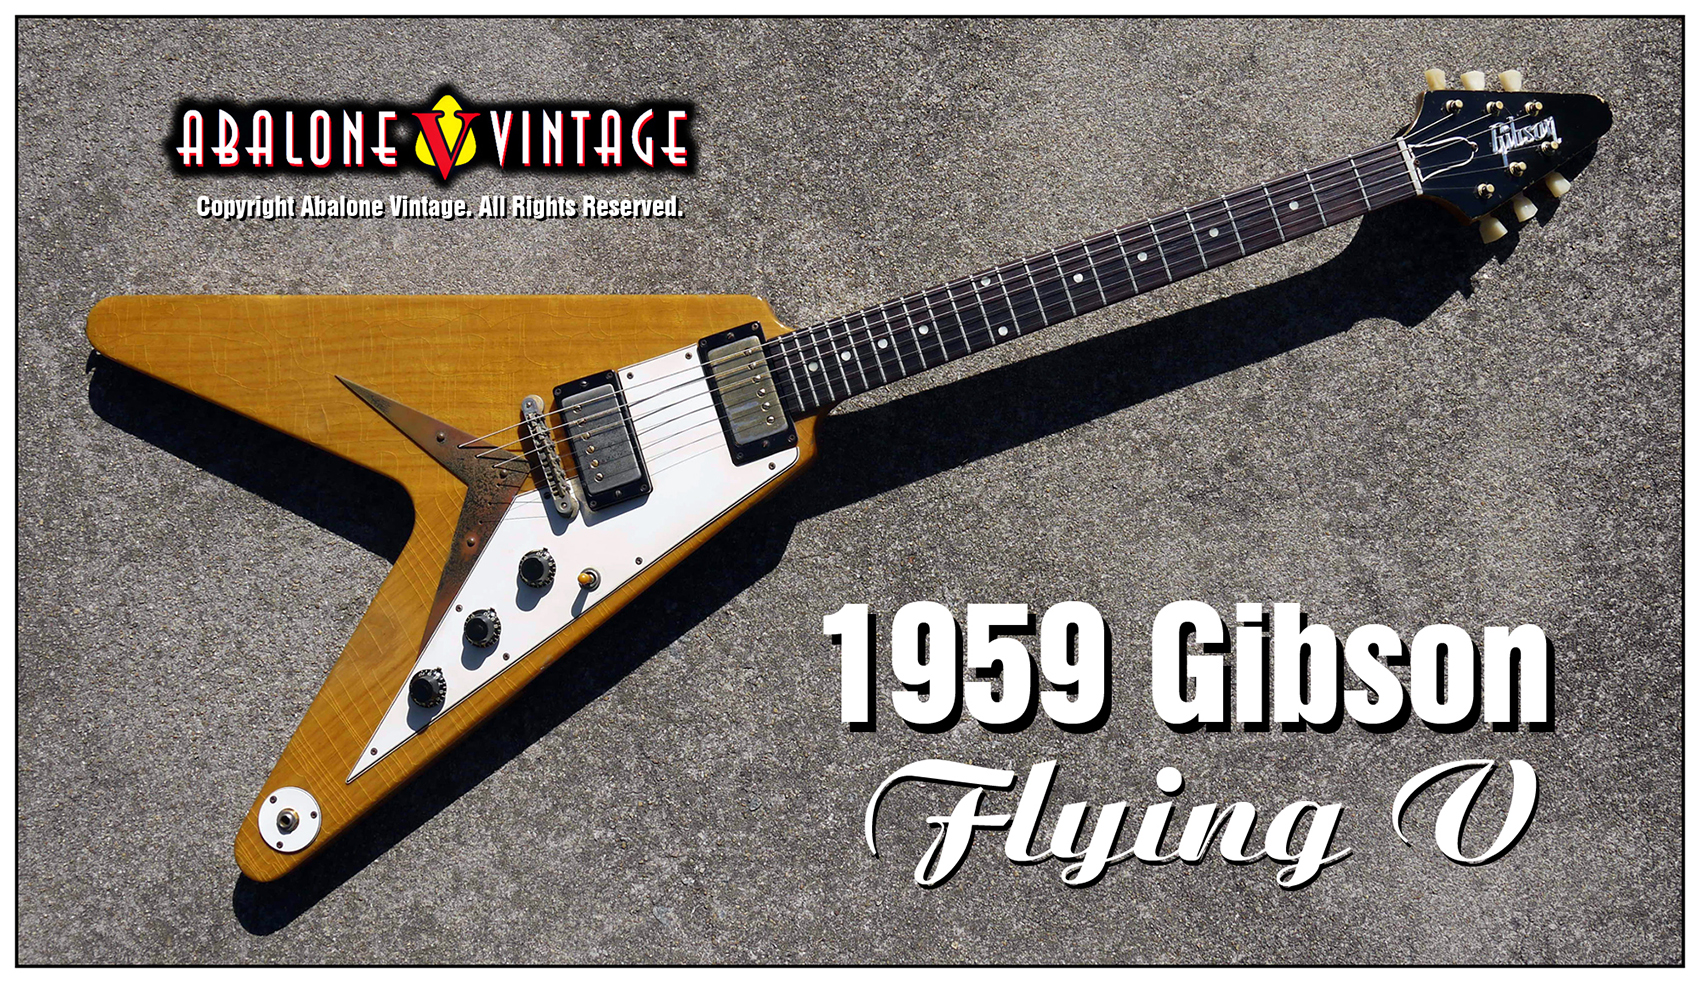 1959 Gibson Flying V guitar. Korina futuristic guitars. Explorer.